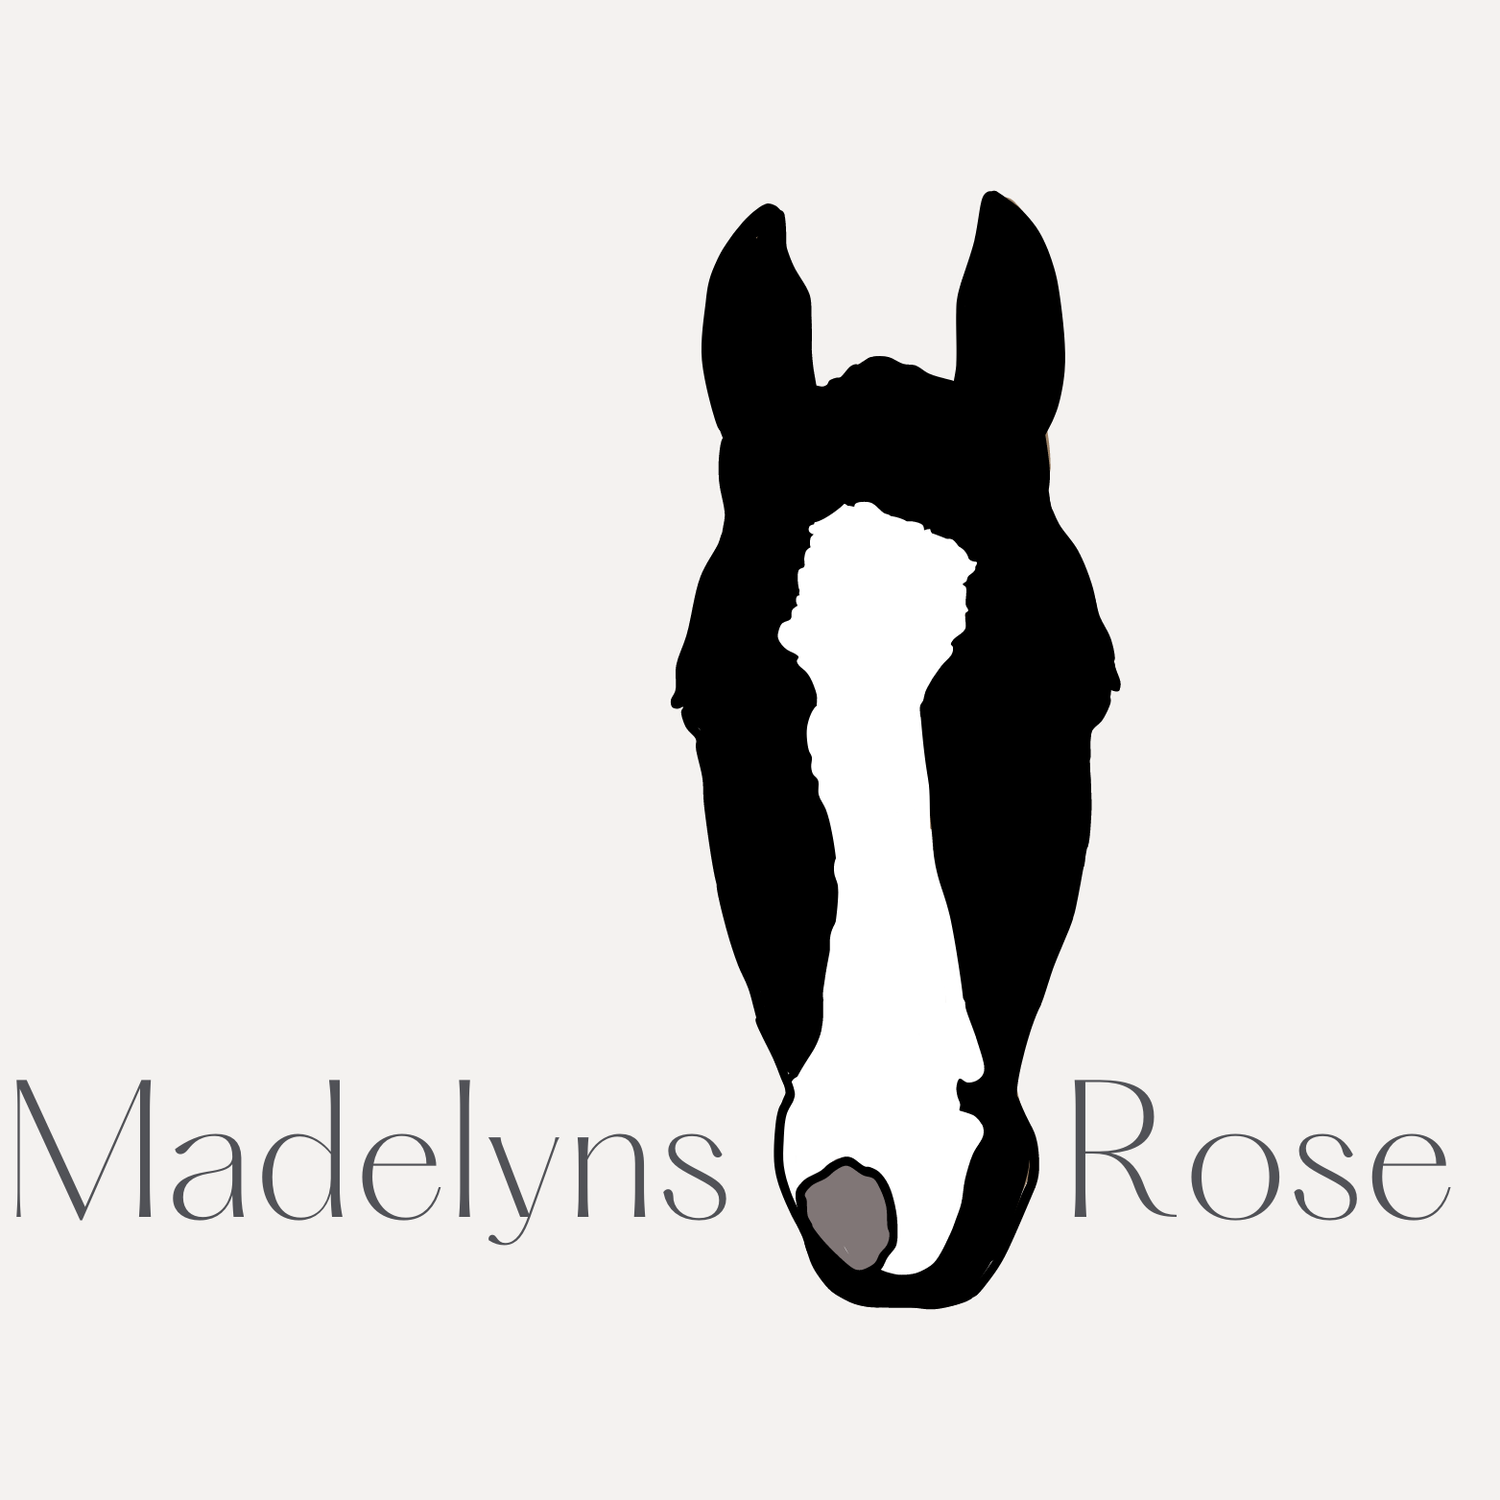 Madelyns Rose Designs